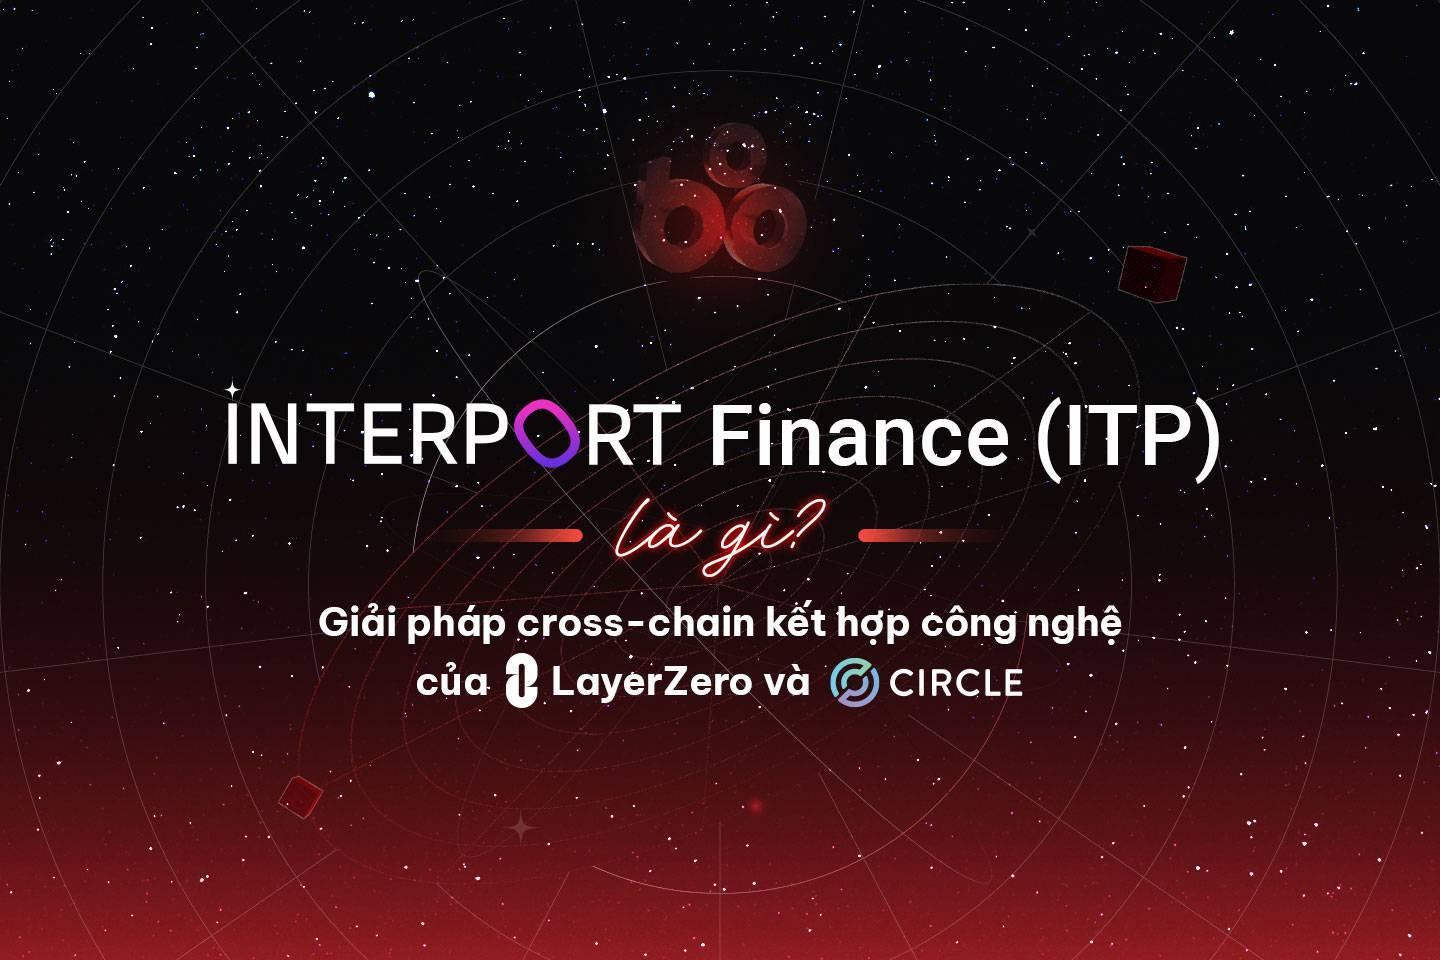 interport-finance-itp-la-gi-giai-phap-cross-chain-ket-hop-cong-nghe-cua-layerzero-va-circle